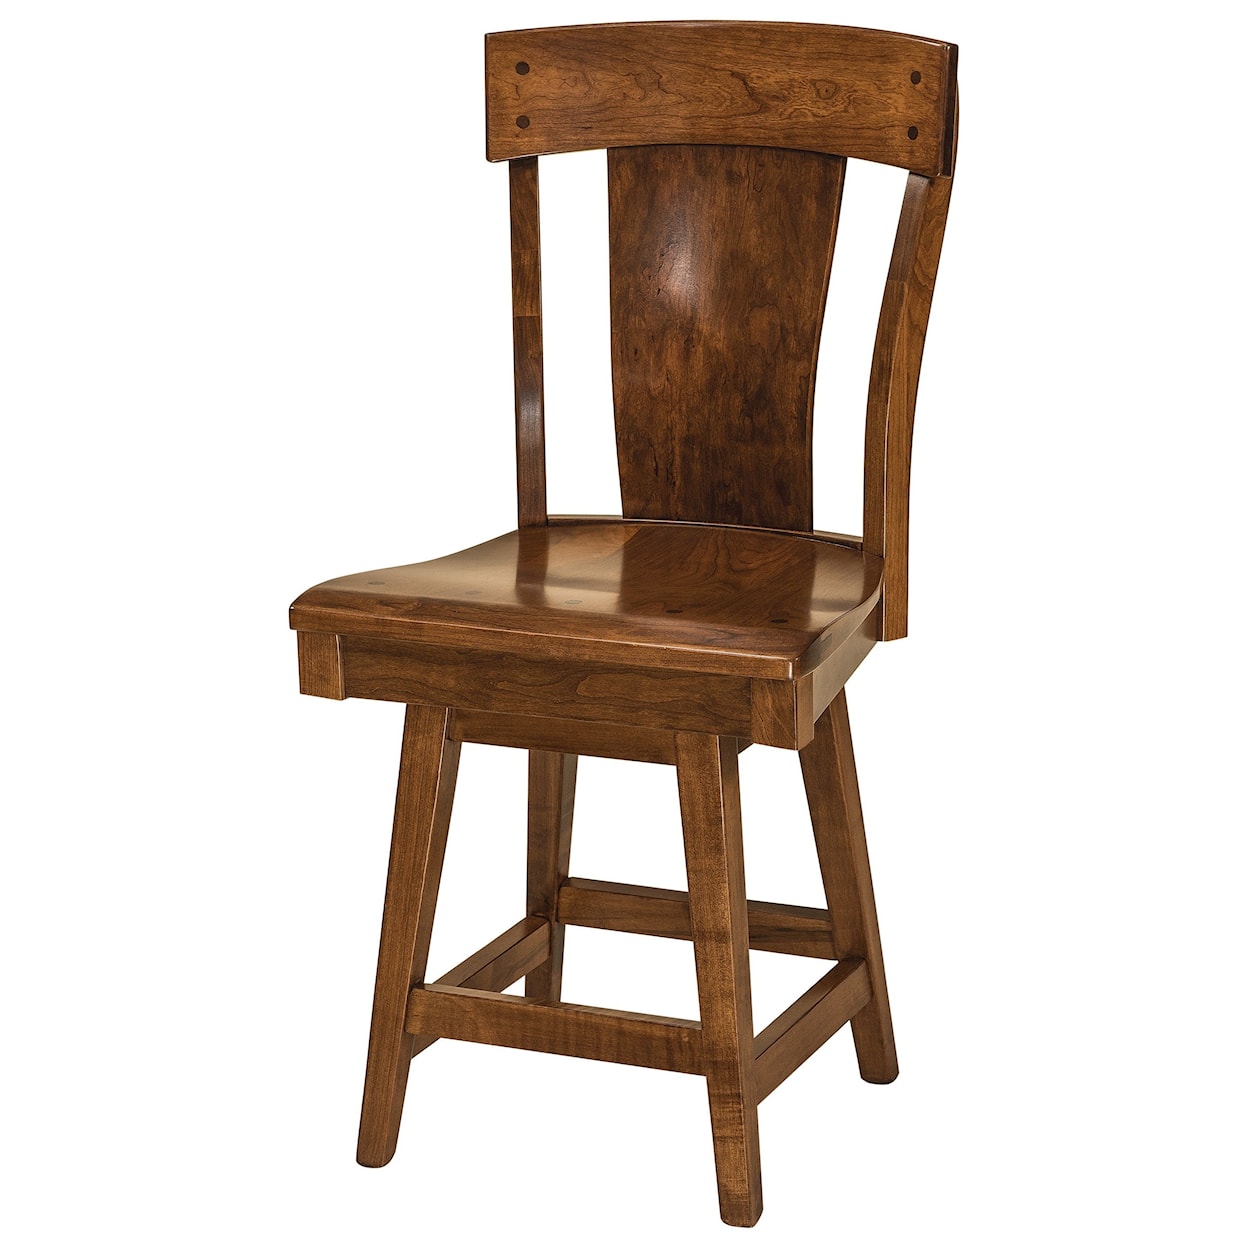 F&N Woodworking Lacombe Swivel Bar Height Stool - Fabric Seat